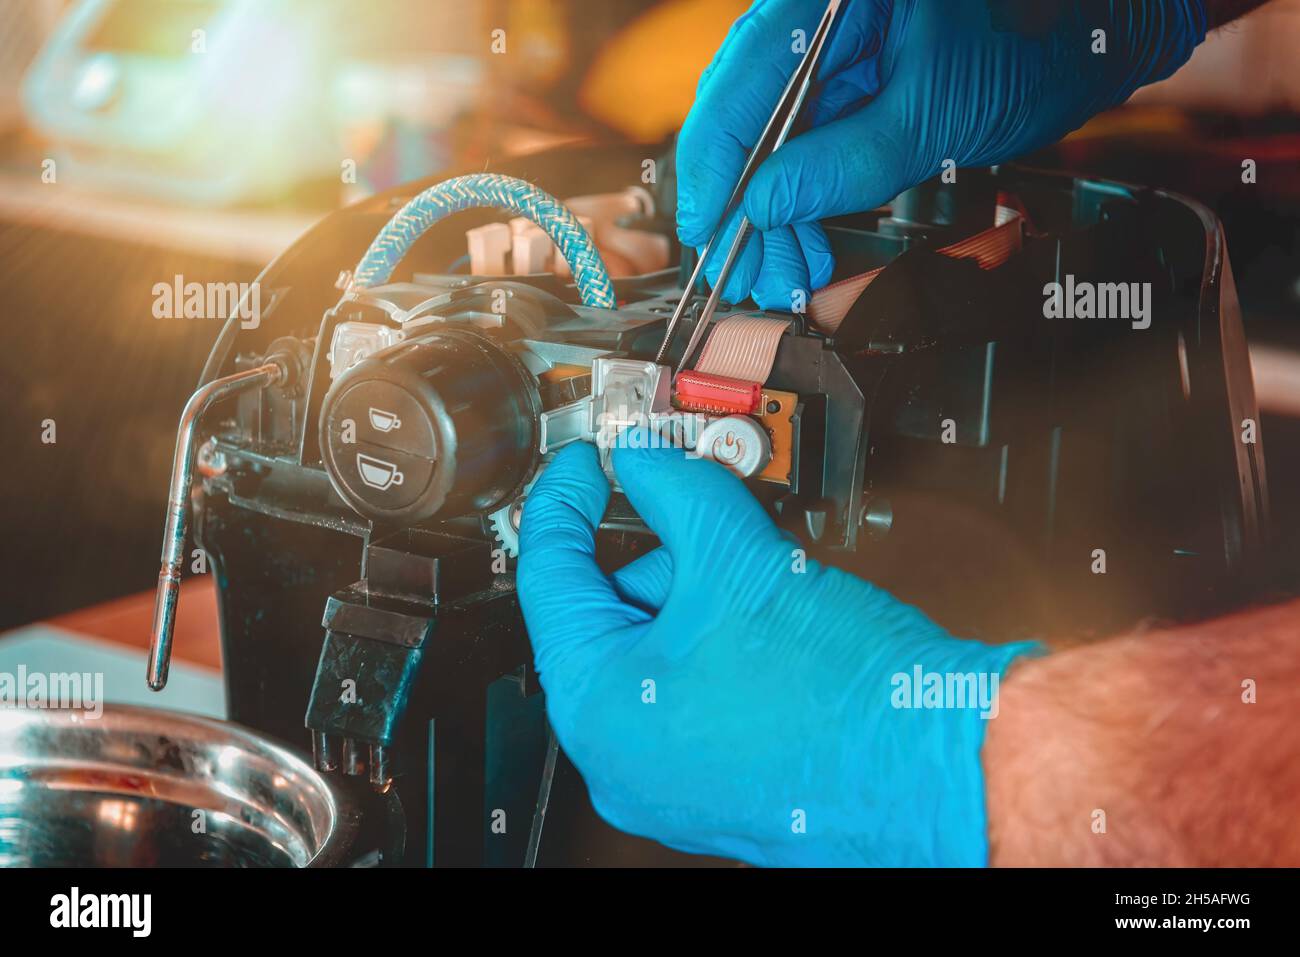 A repairman fixes a broken coffee maker, repair of household appliances Stock Photo